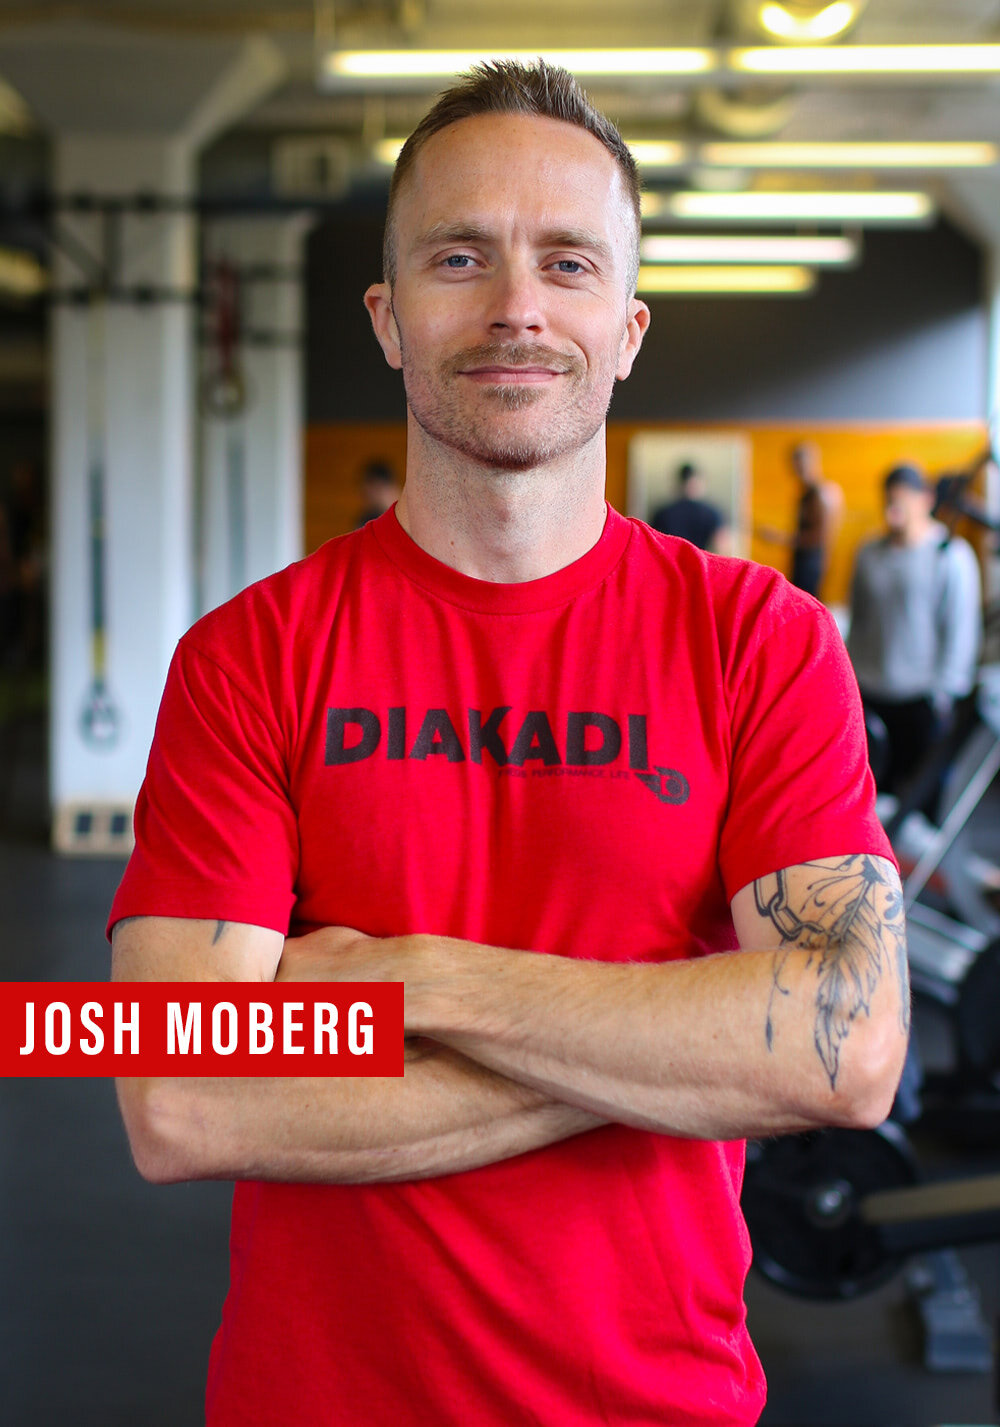 josh-moberg-personal-trainer.jpg